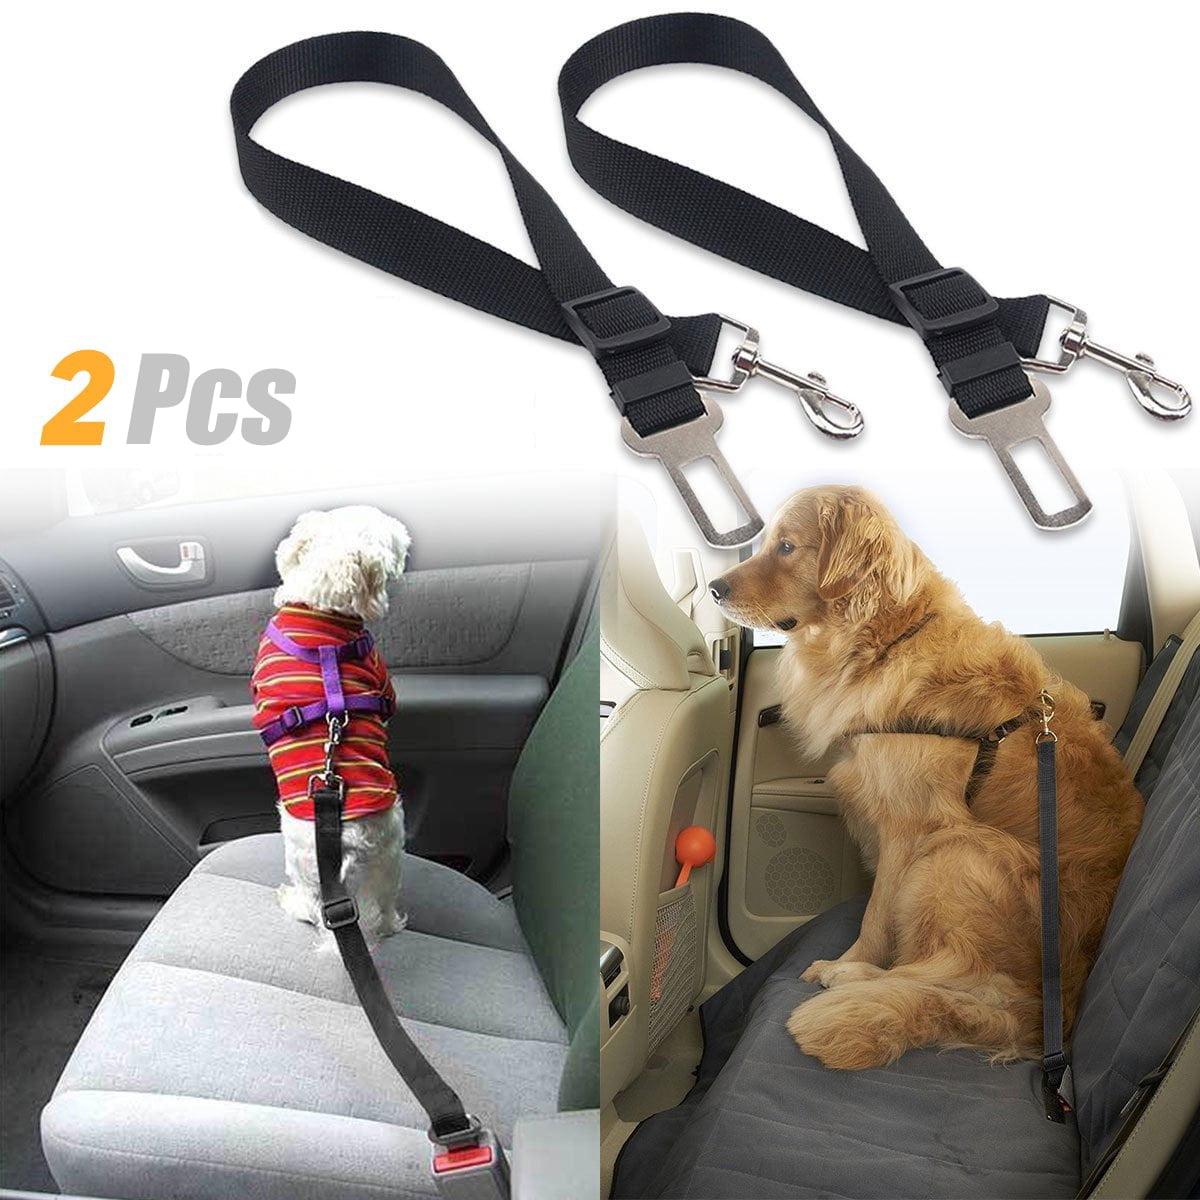 2pcs Nylon Dog Pet Safety Car Vehicle Seat Belt Harness Lead Clip 7 Colors 